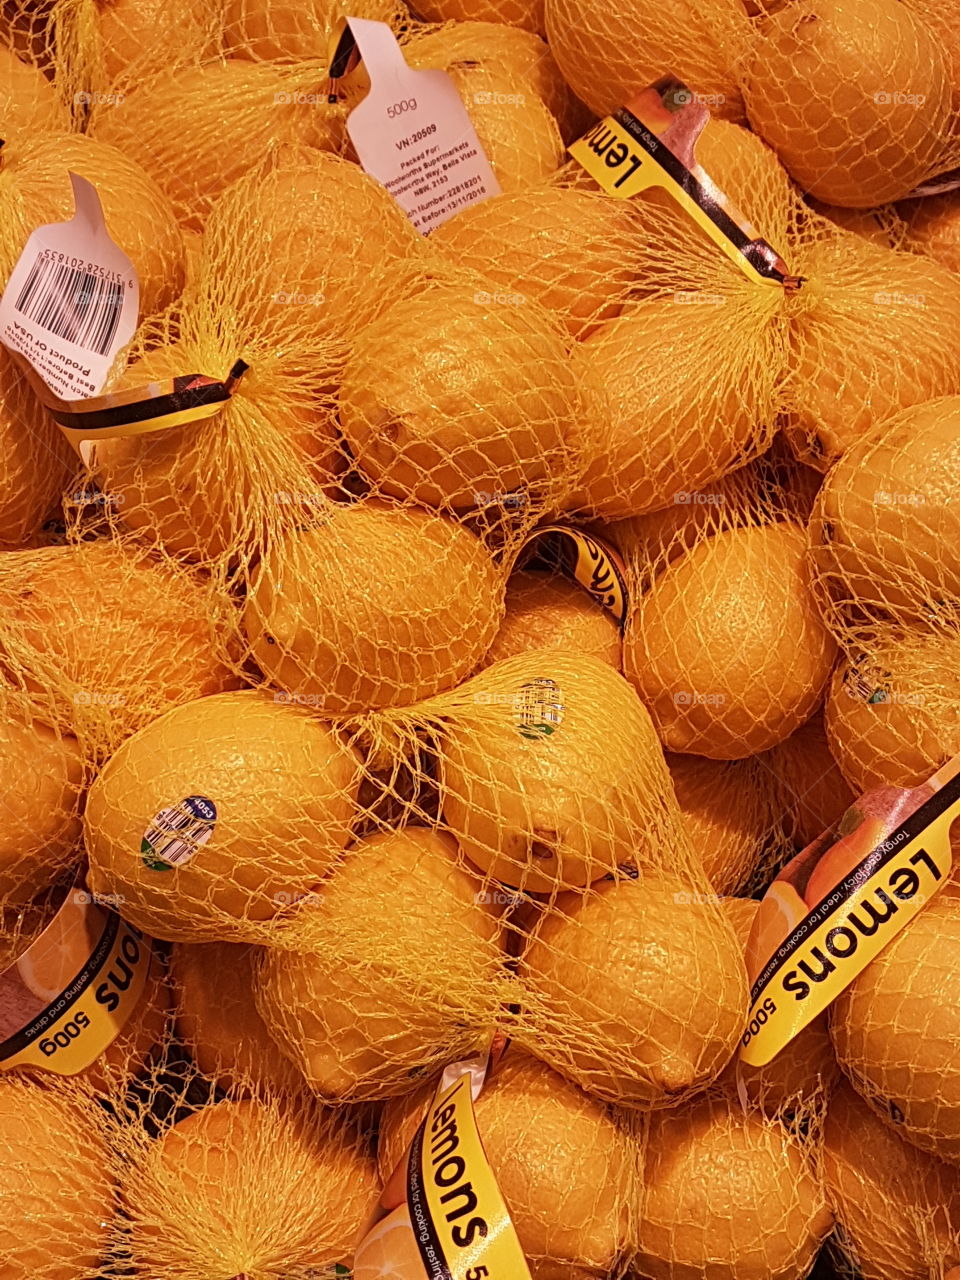 lemons at the supermarket